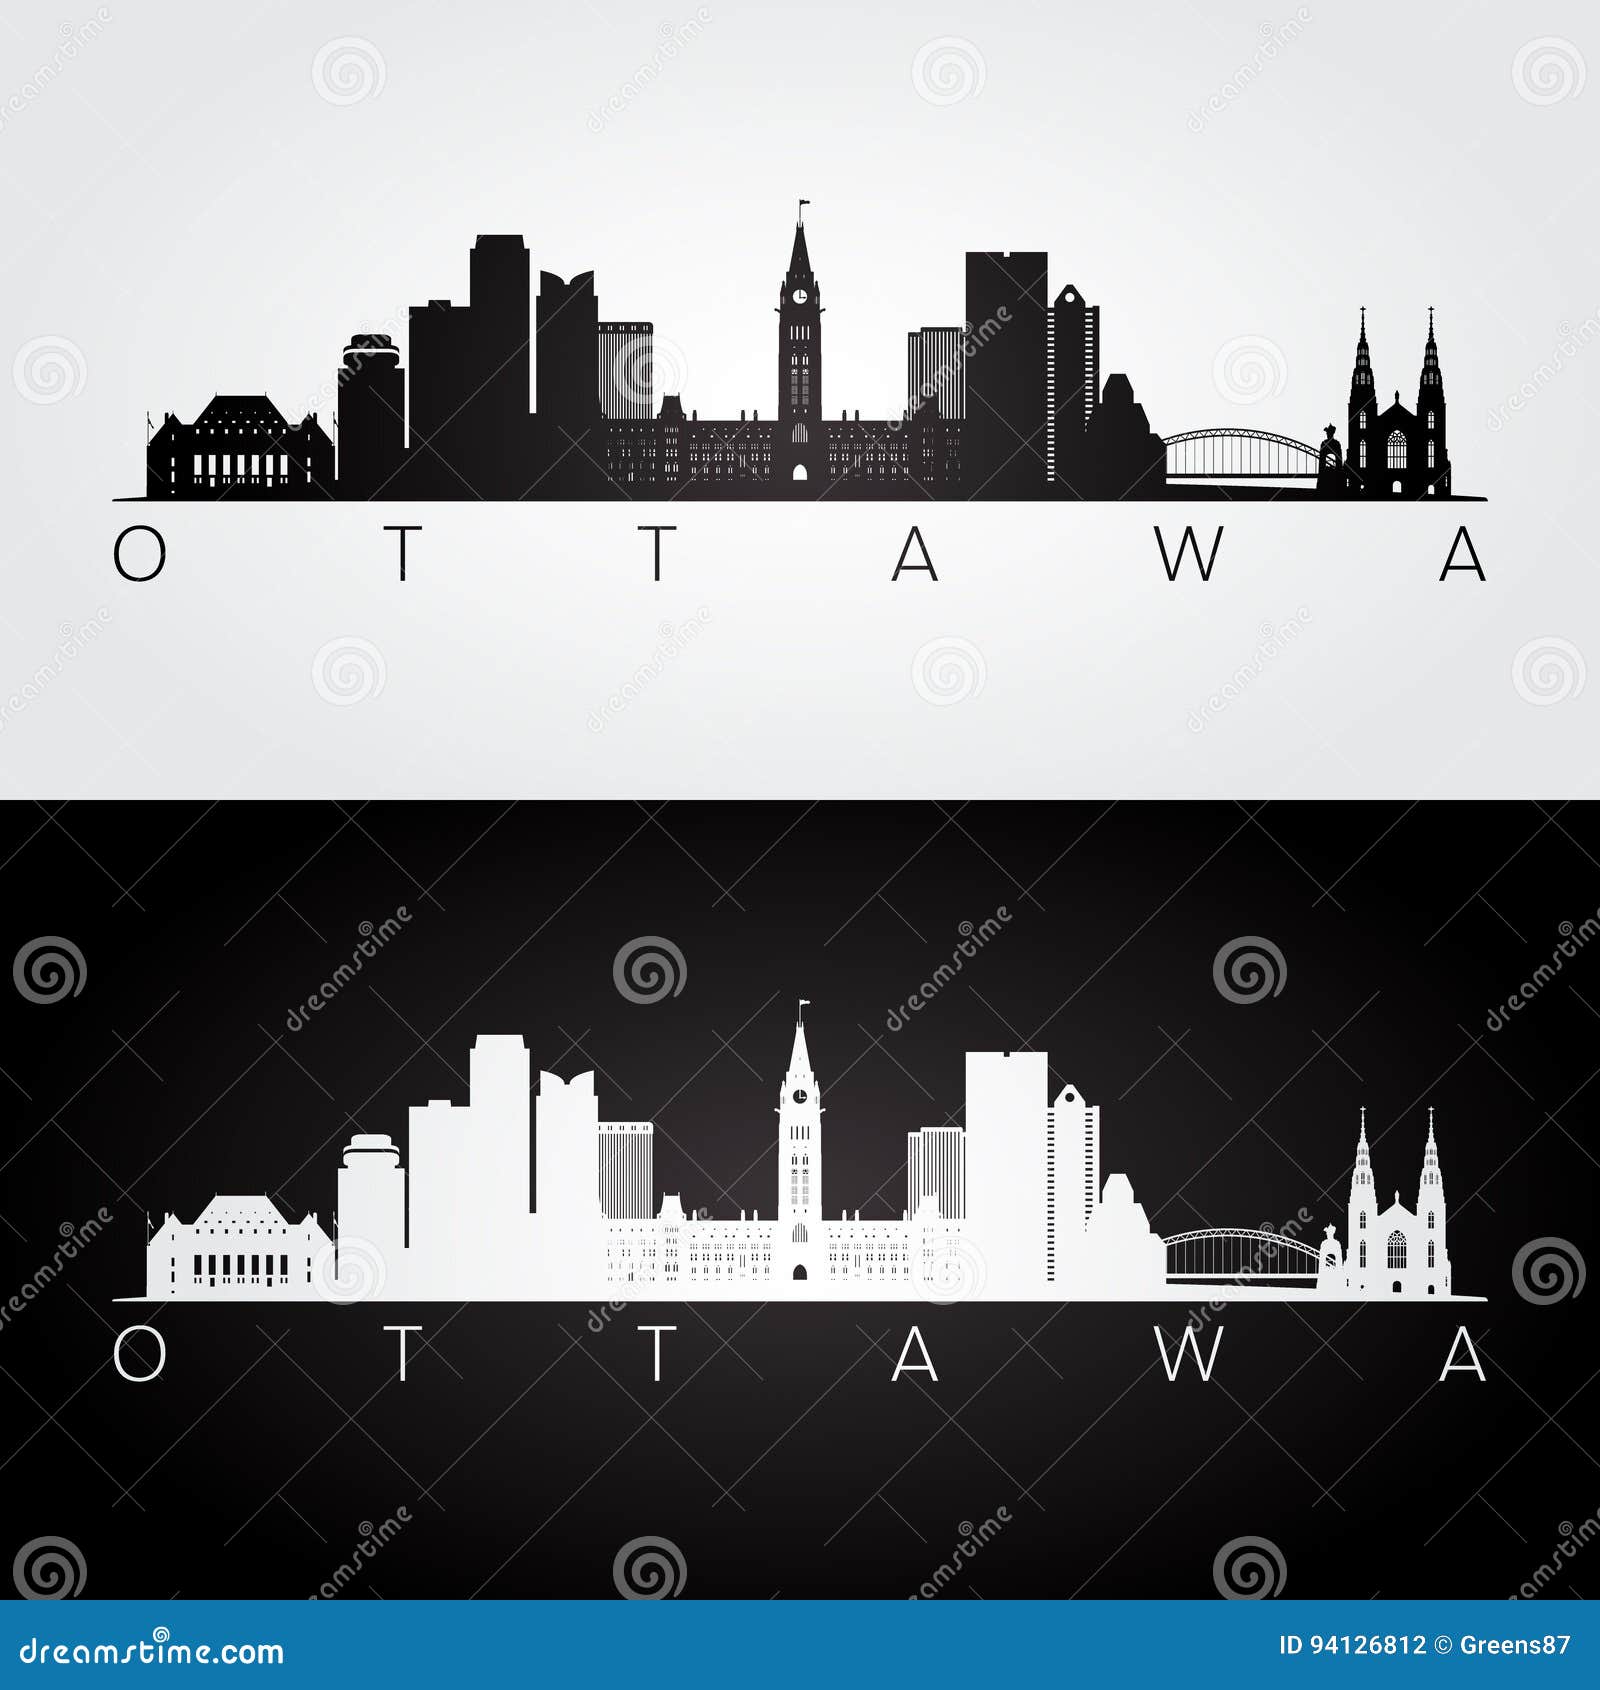 ottawa skyline and landmarks silhouette